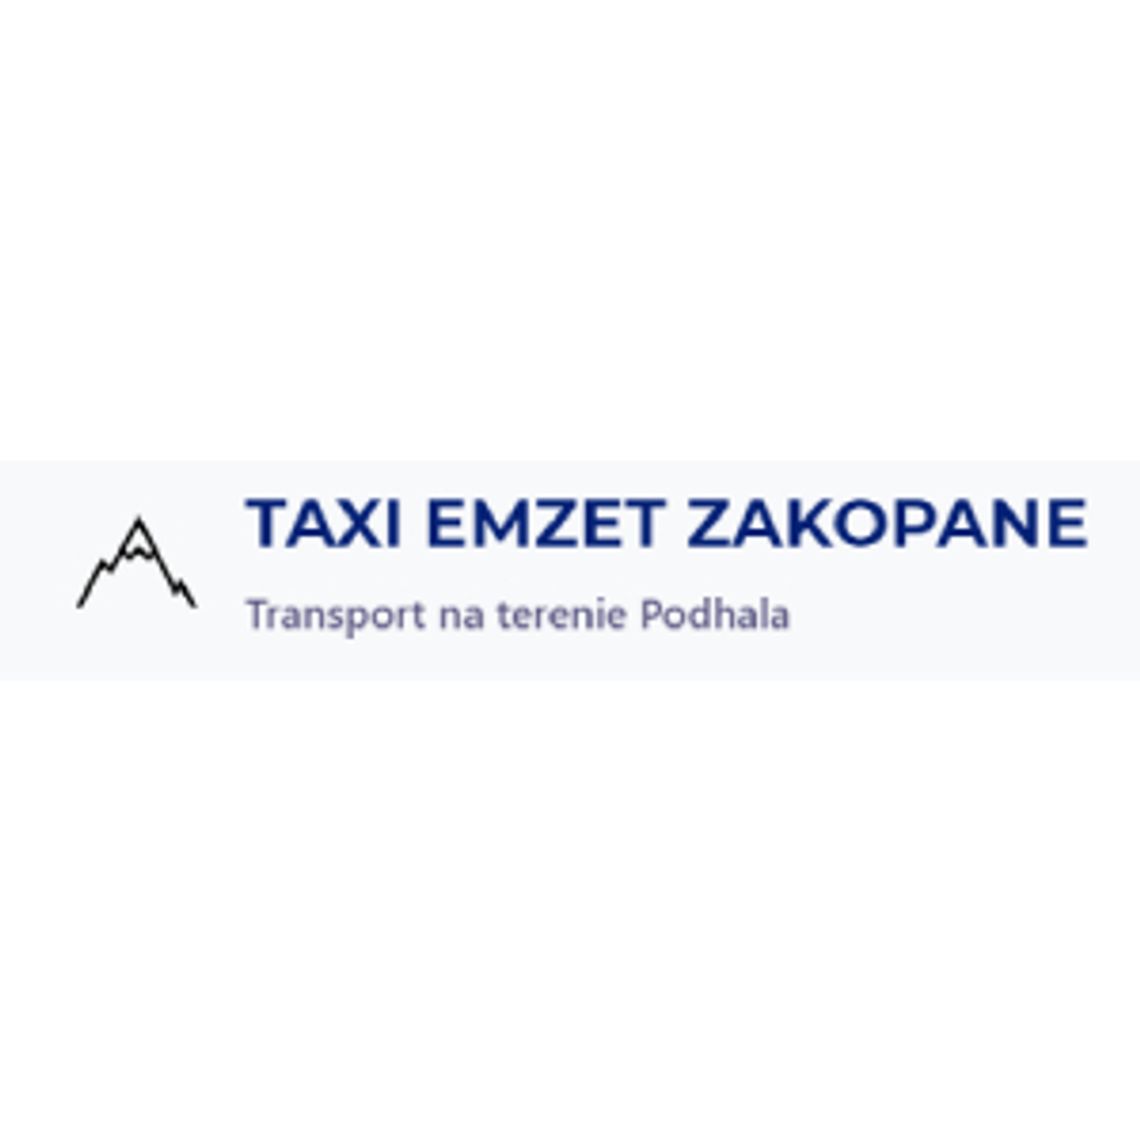 Transport  Zakopane - taxieMZet